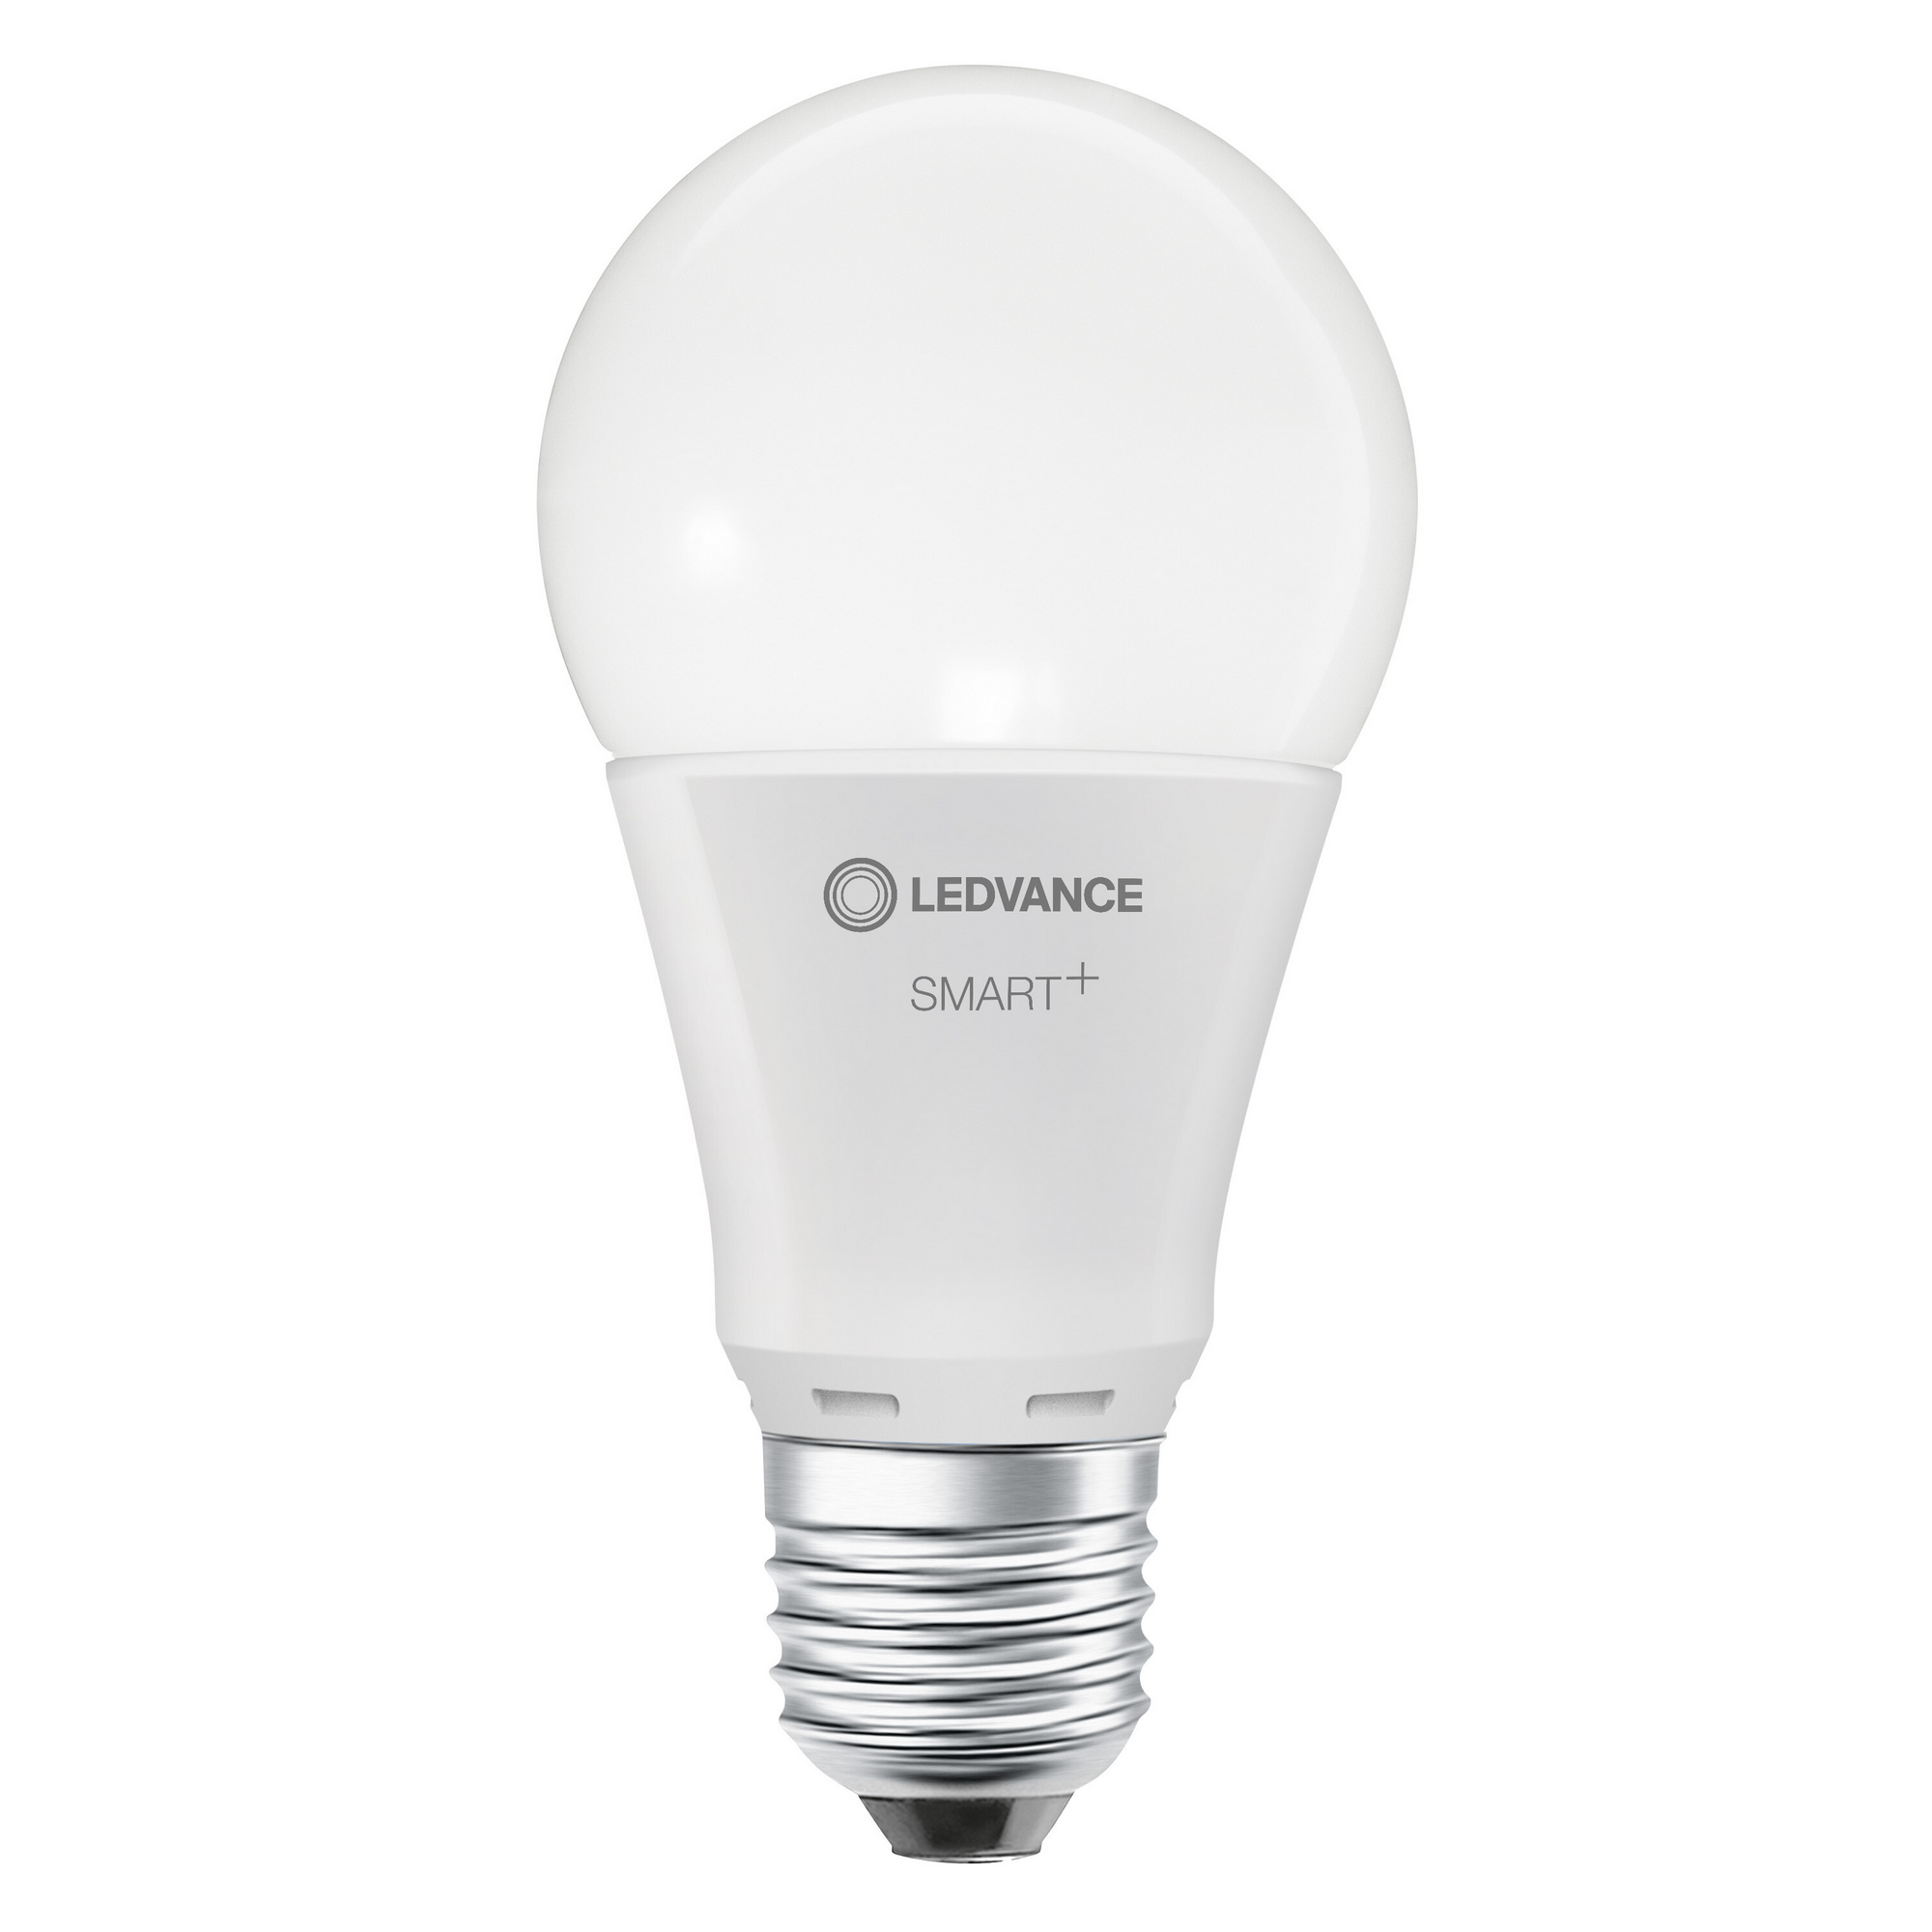 LED-Lampe 'Smart+ WiFi CLA' warmweiß 14 W E27 1521 lm, dimmbar + product picture